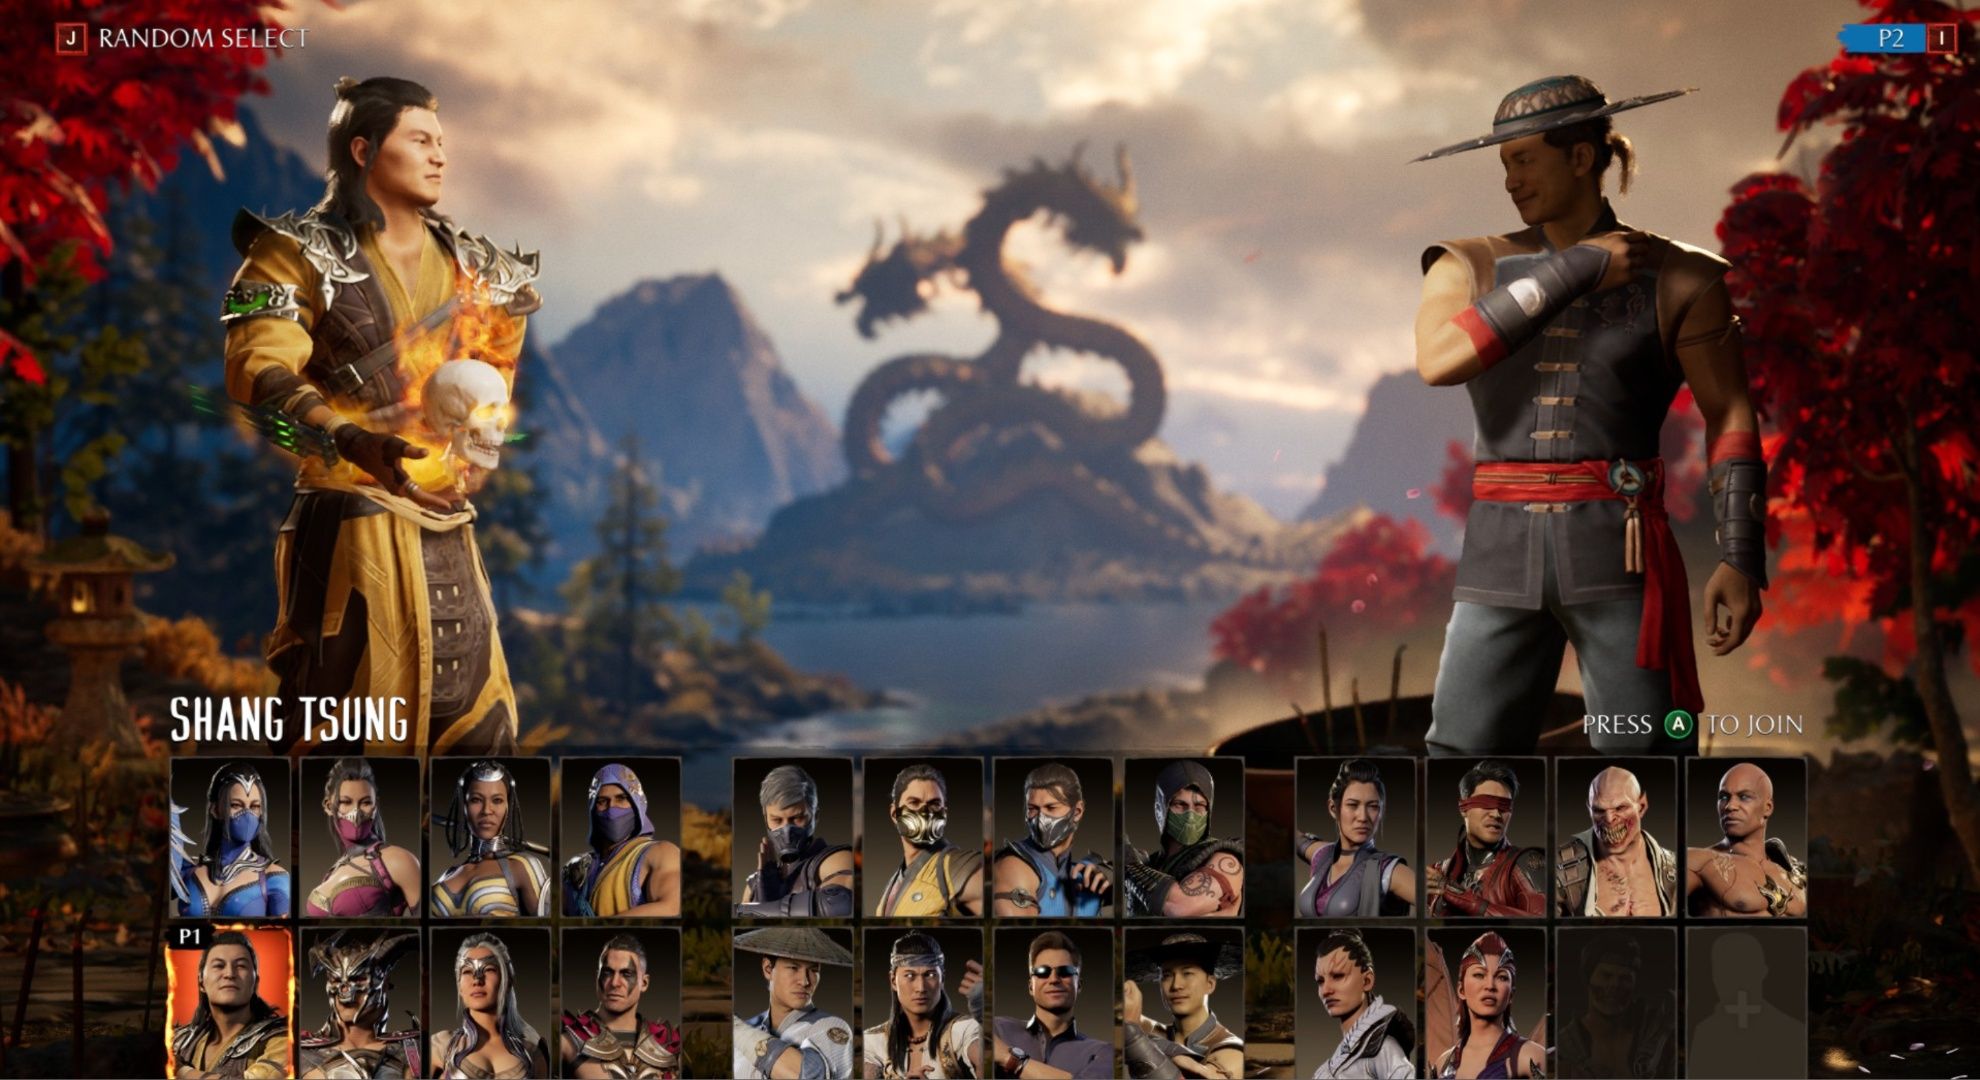 The character select screen with Shang Tsung and Kung Lao selected in Mortal Kombat 1.